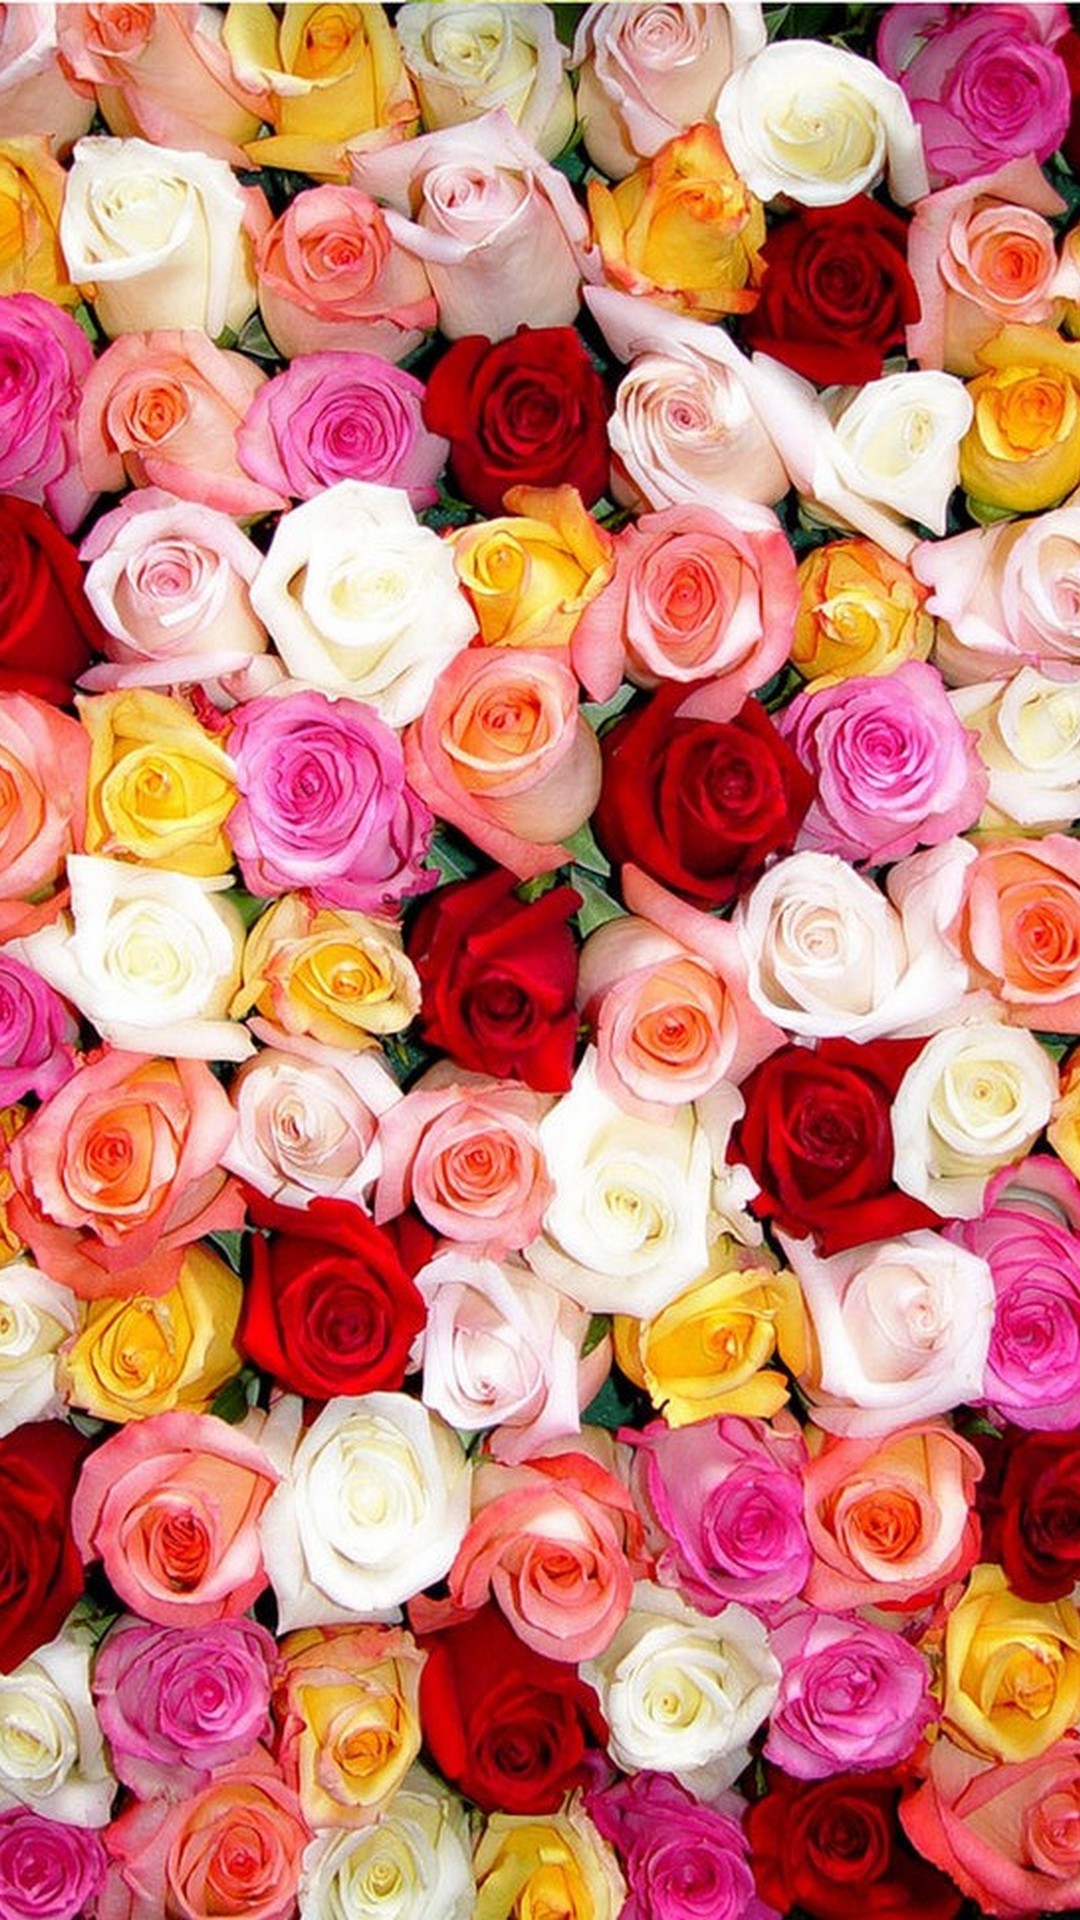 rose wallpaper rose wallpaper,flower,rose,garden roses,petal,cut flowers